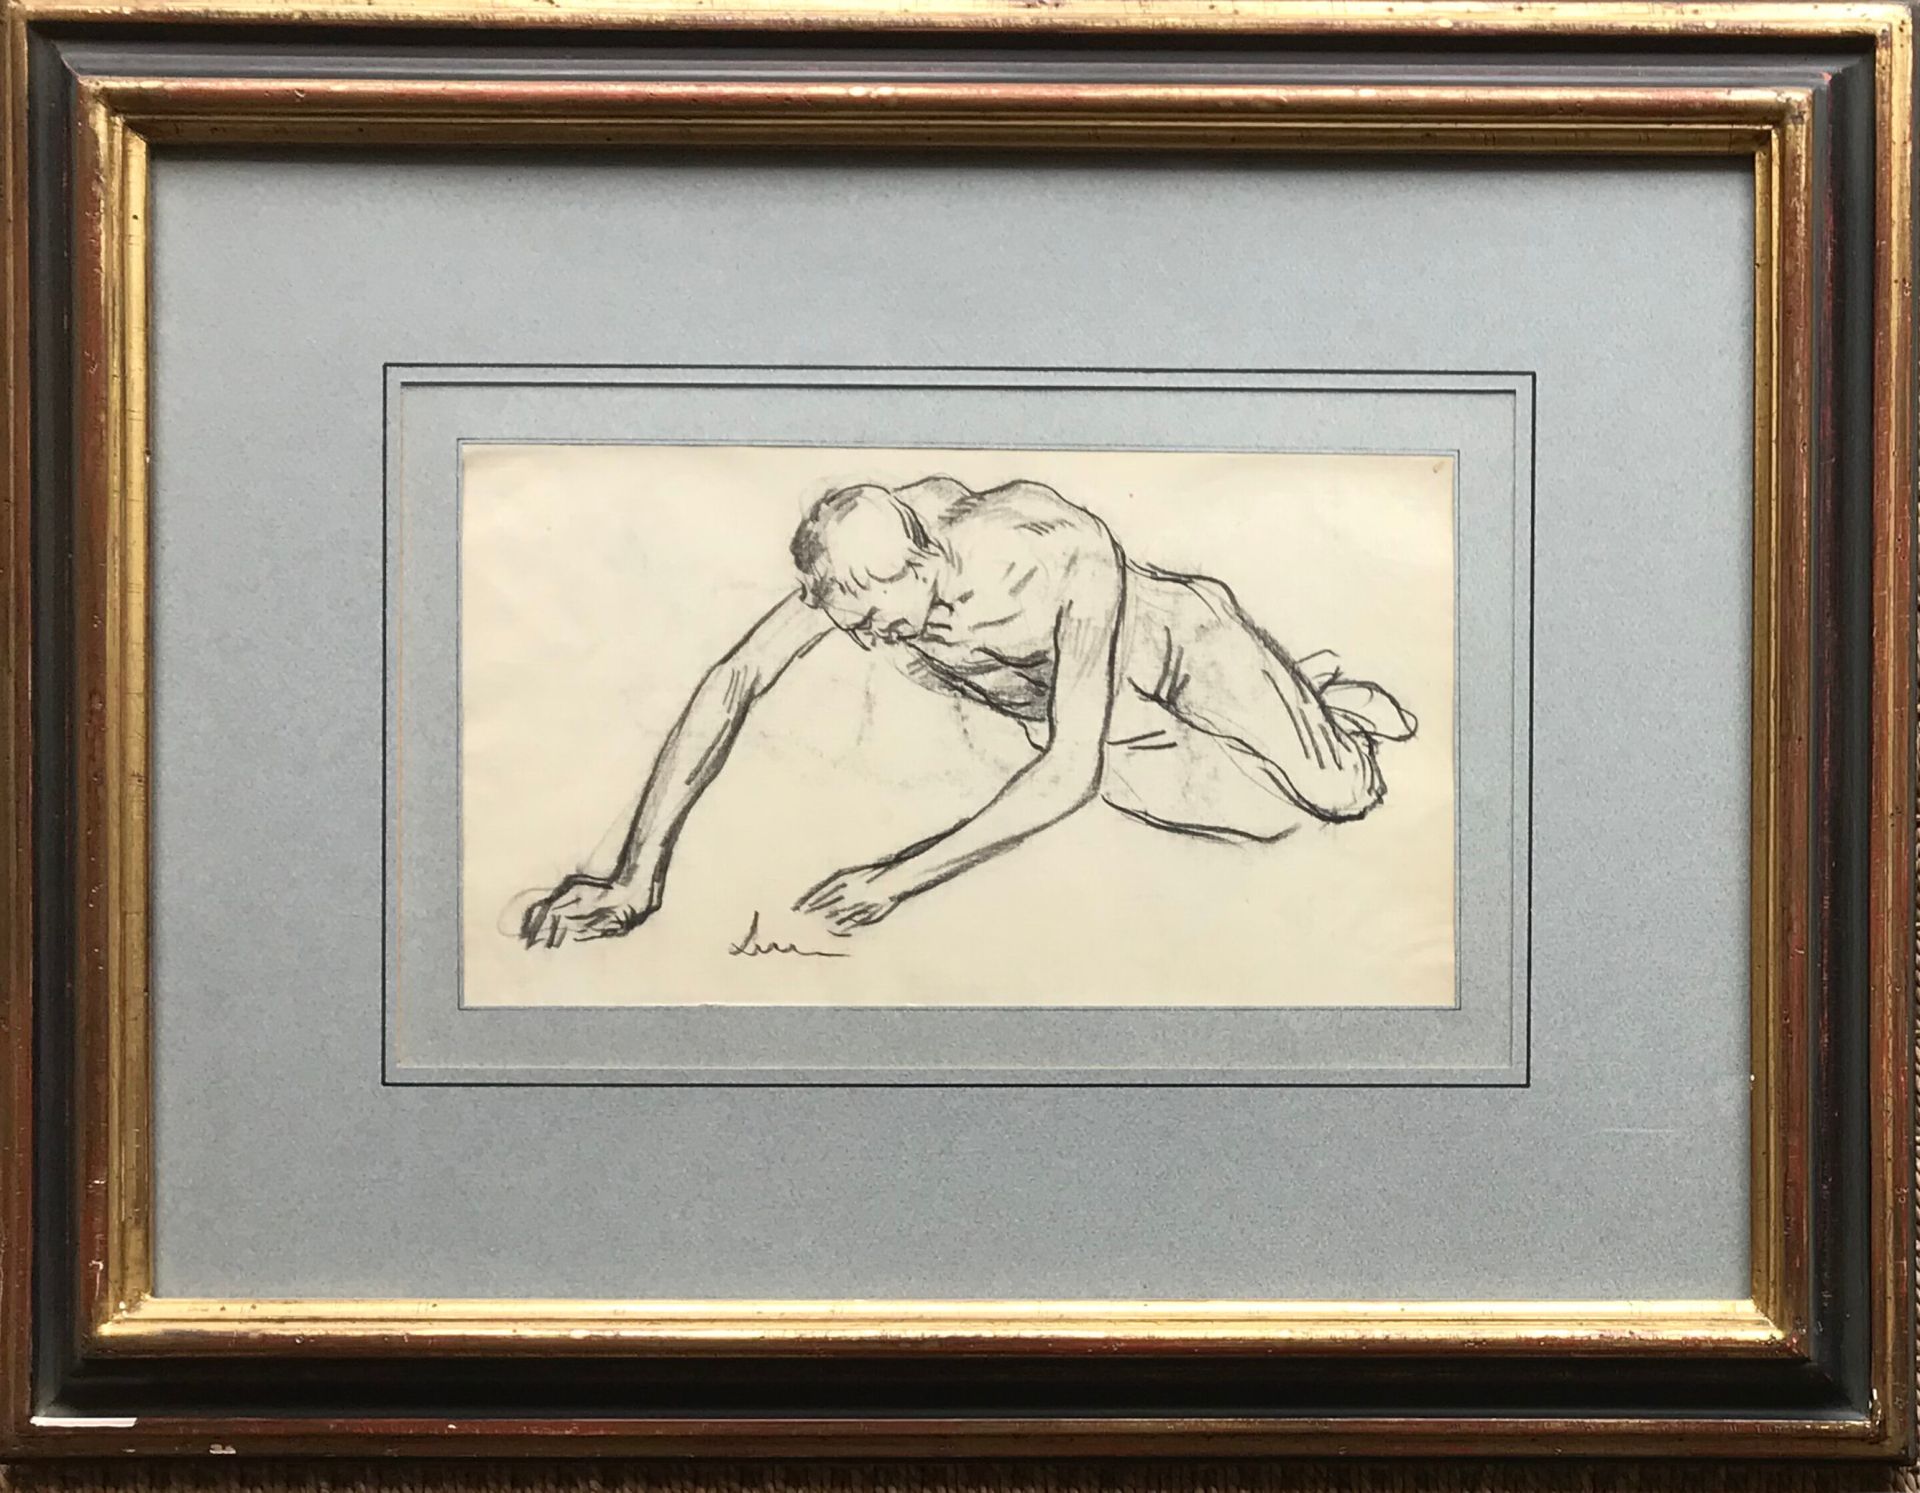 Maximilien Luce 马克西米利安-卢斯(1858-1941)

一个人的研究

炭笔画

右下方有签名

17 x 30厘米

出处：Prouté画&hellip;